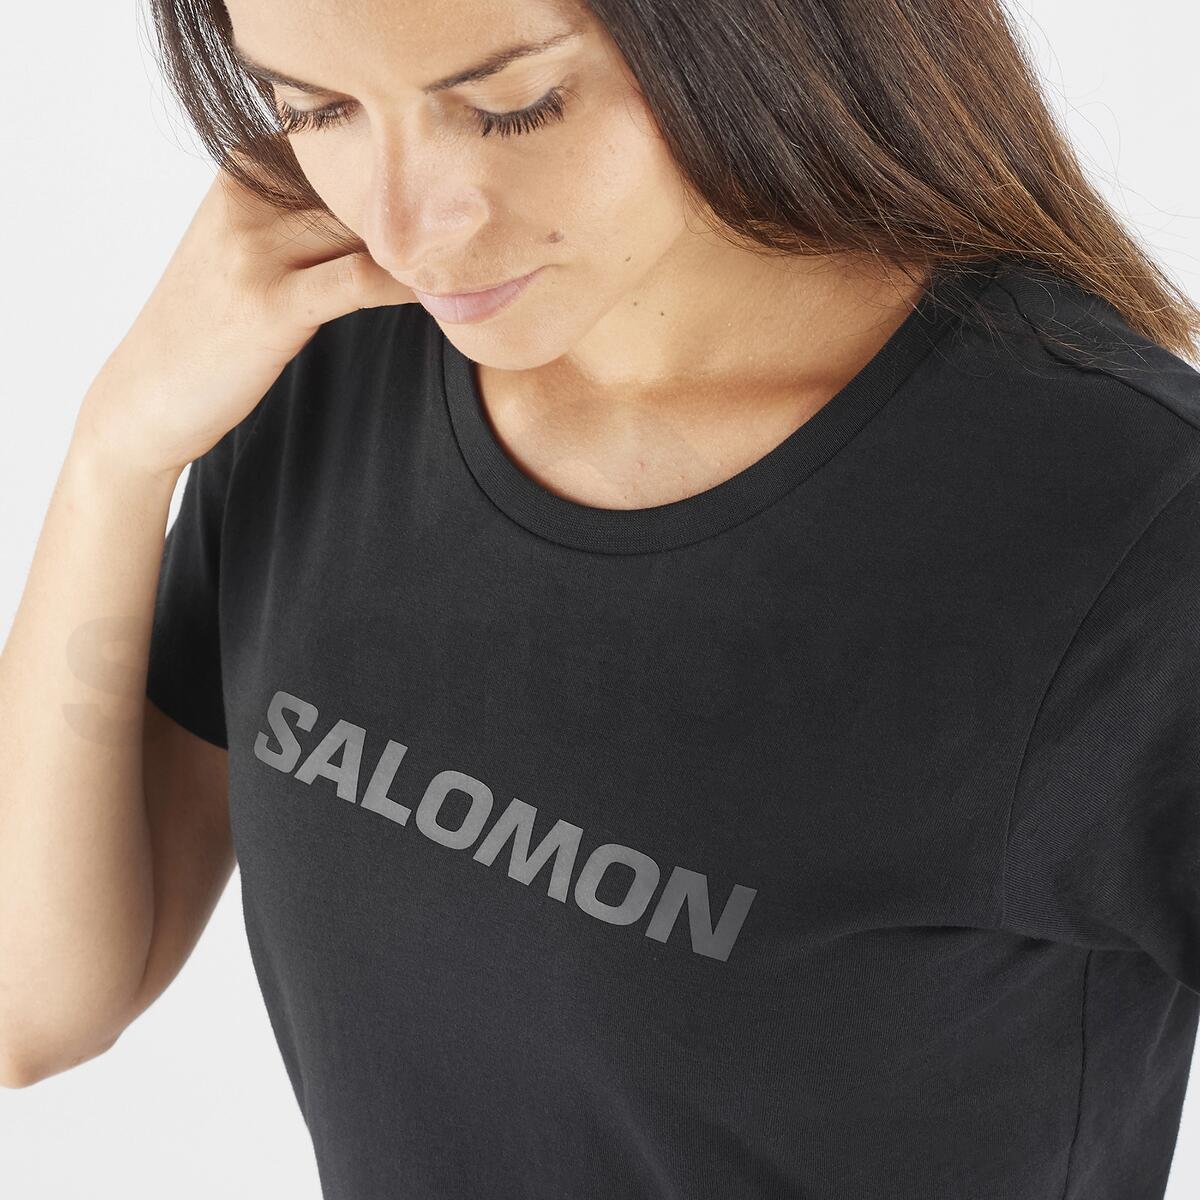 Tričko Salomon Outlife Big Logo W - černá